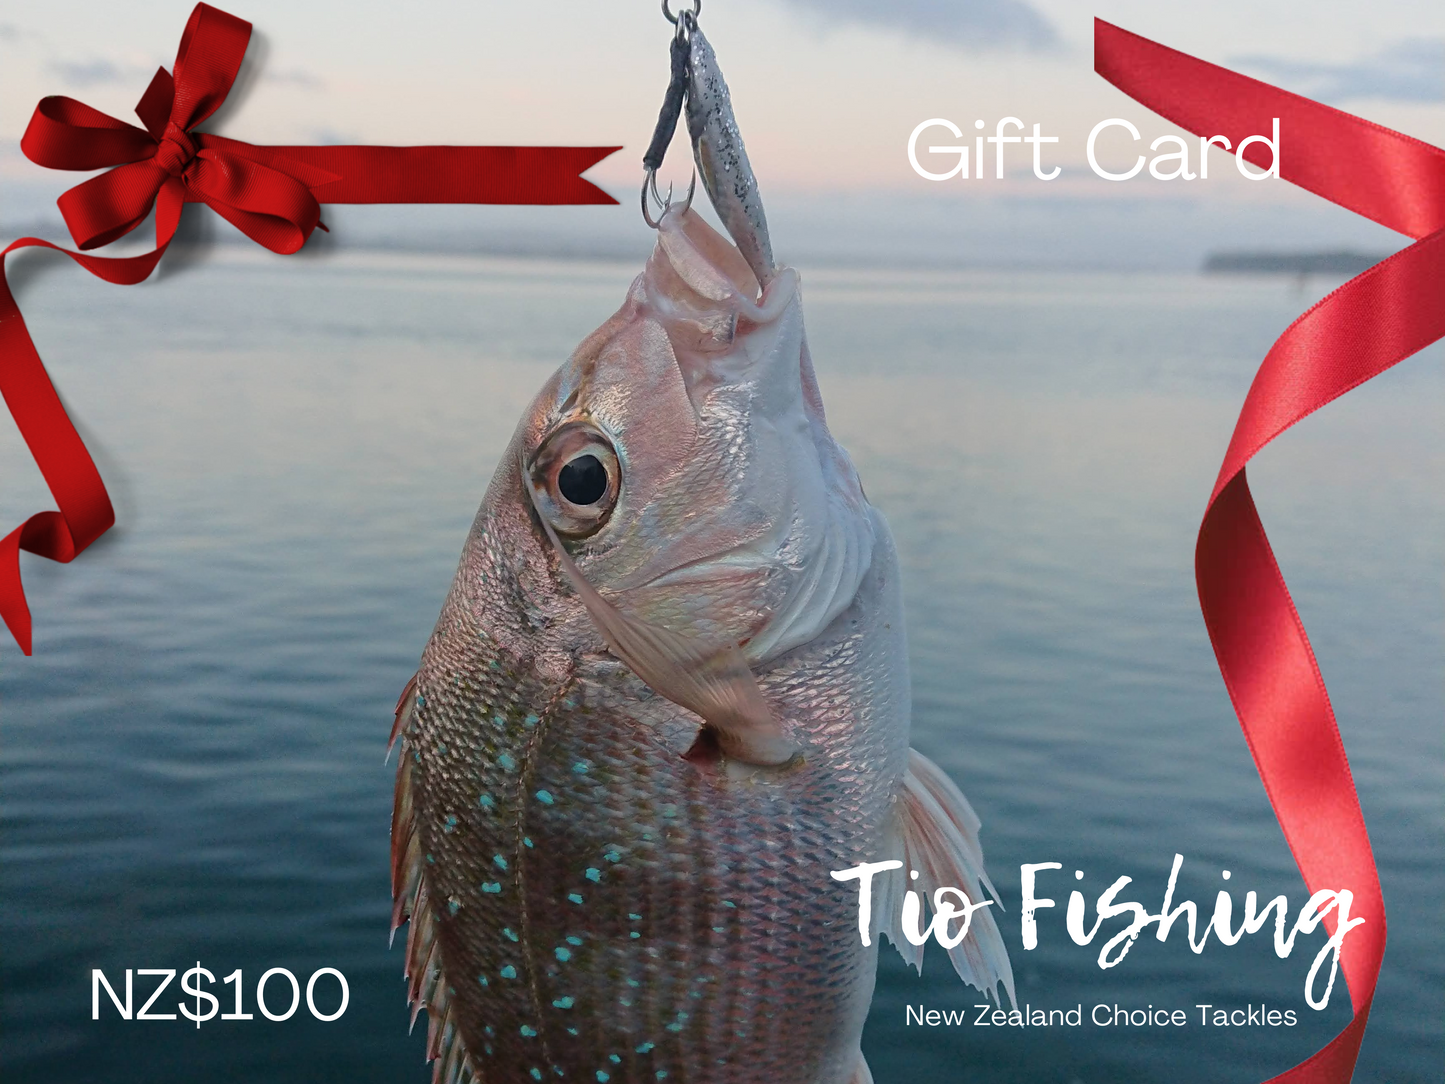 Tio Fishing Gift Card